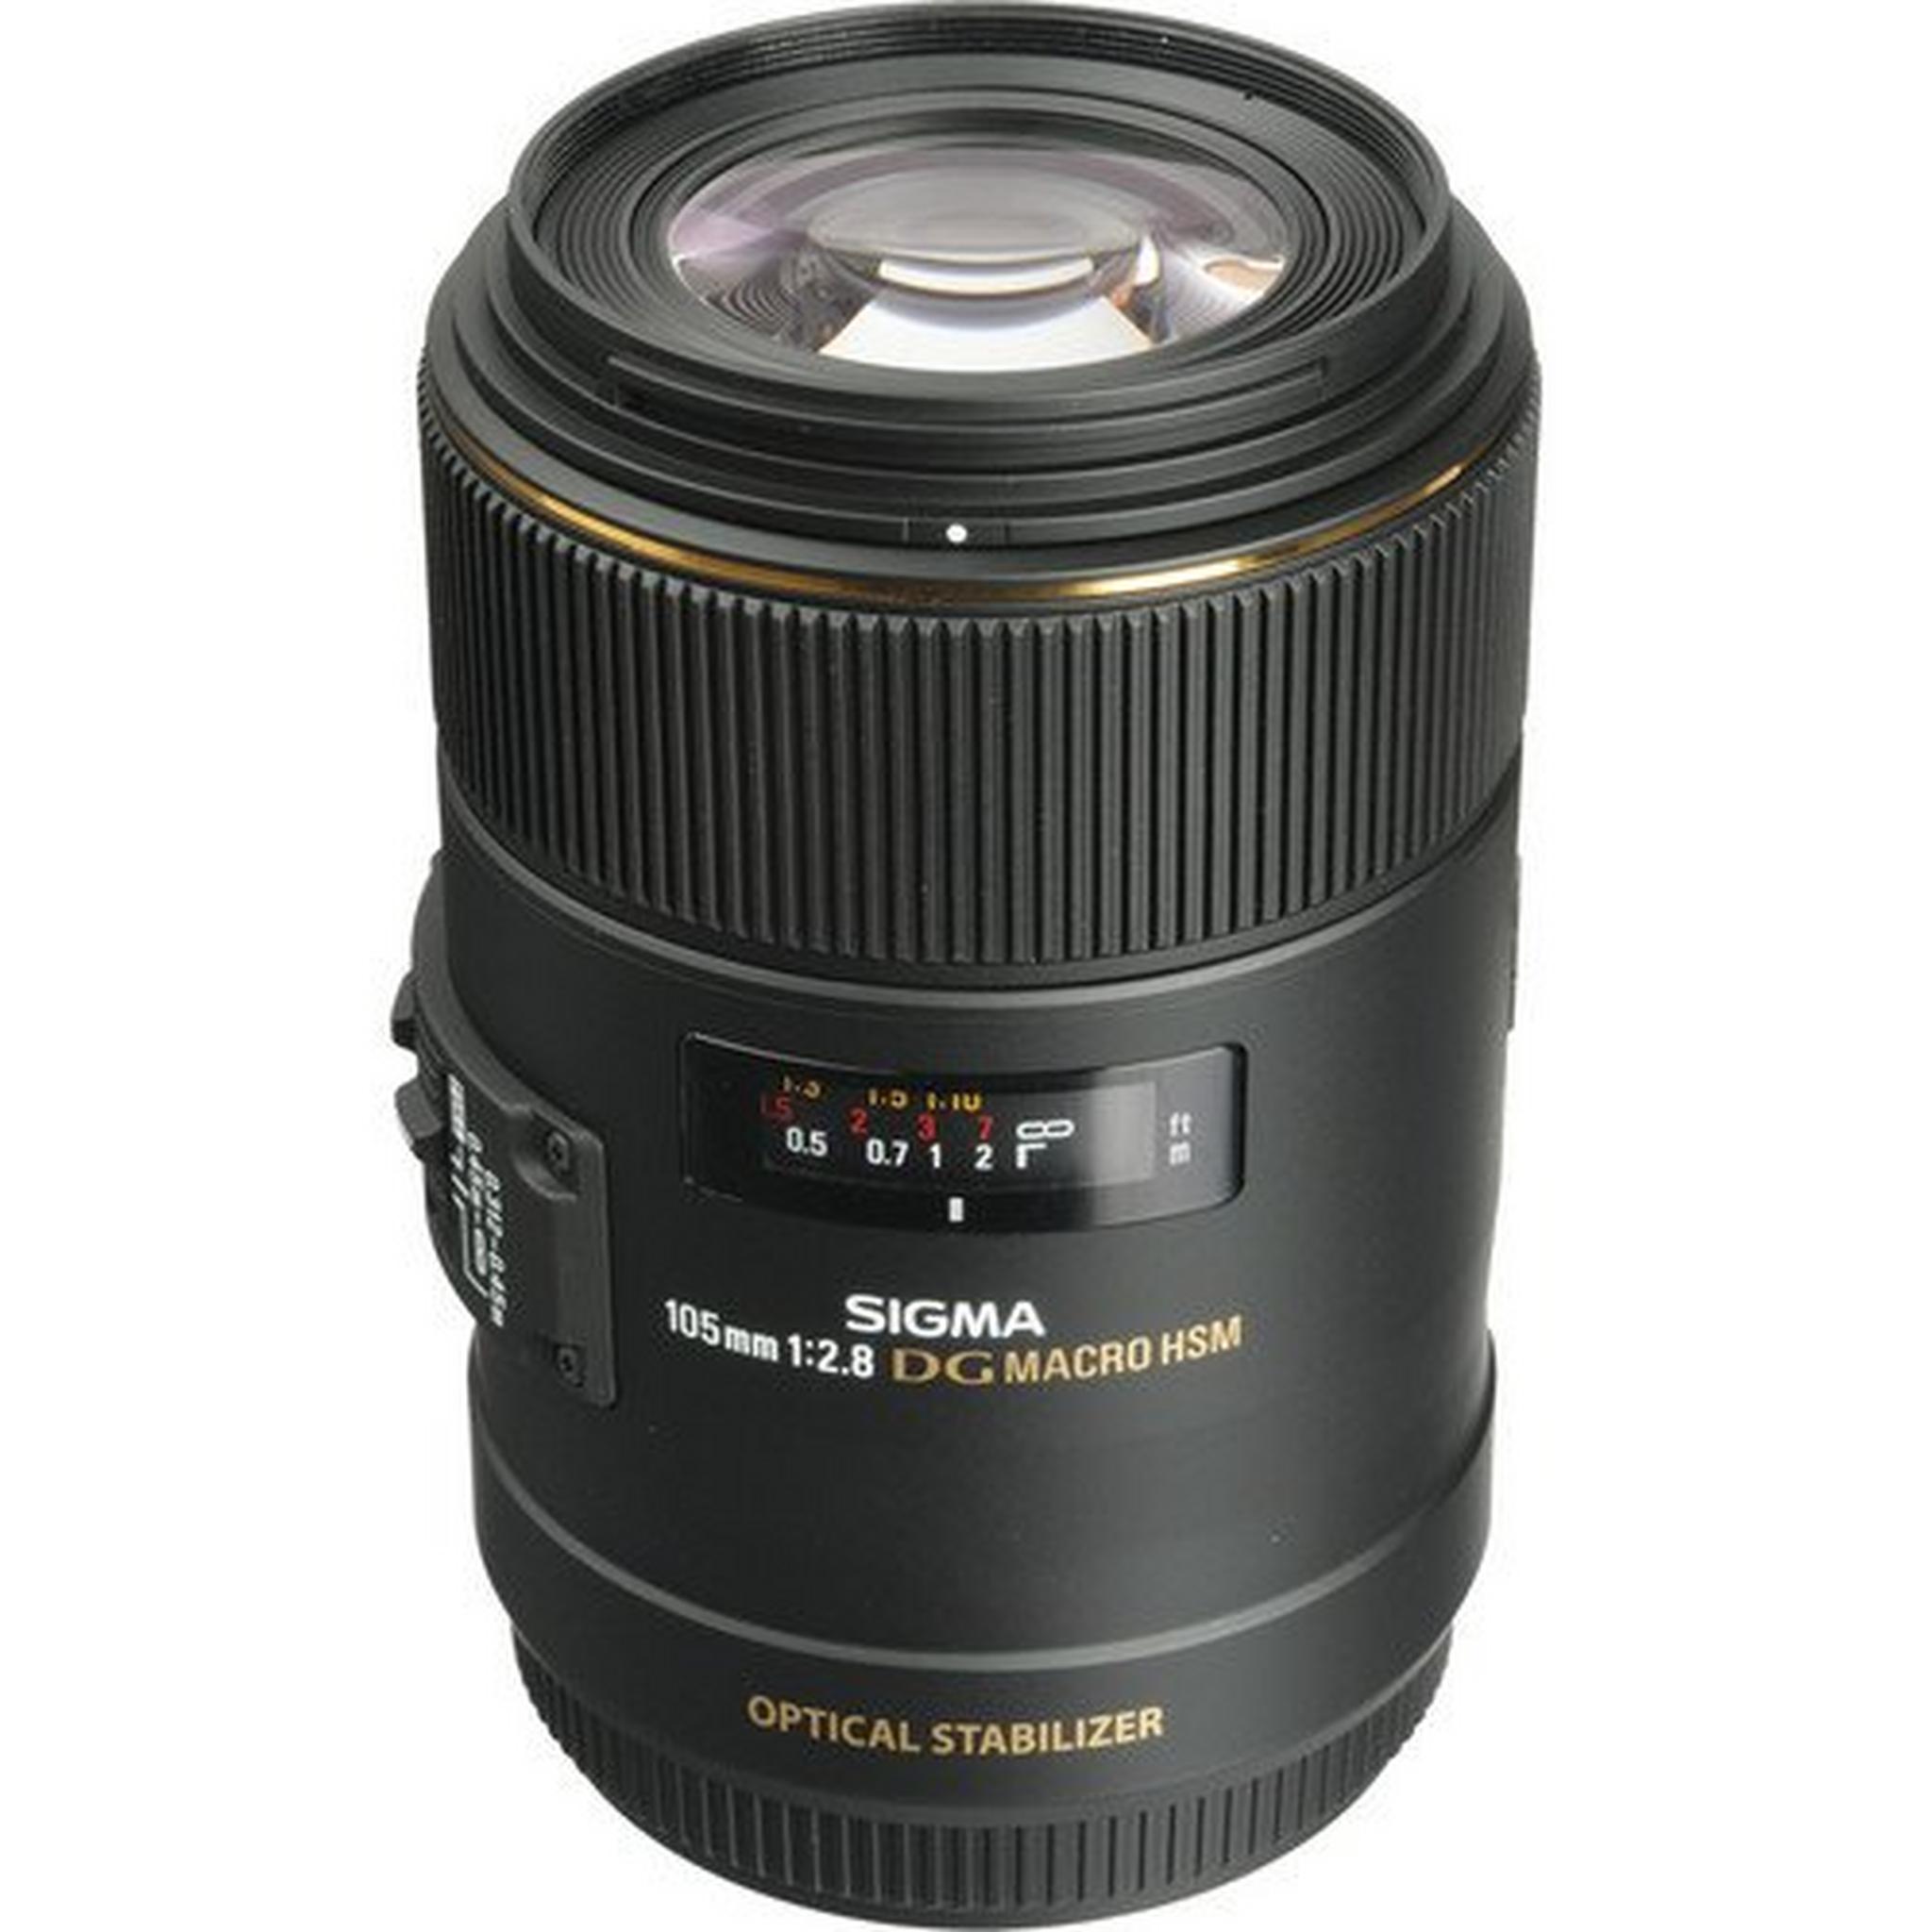 Sigma 105mm f2.8 DG Macro OS HSM Lens - Canon Mount